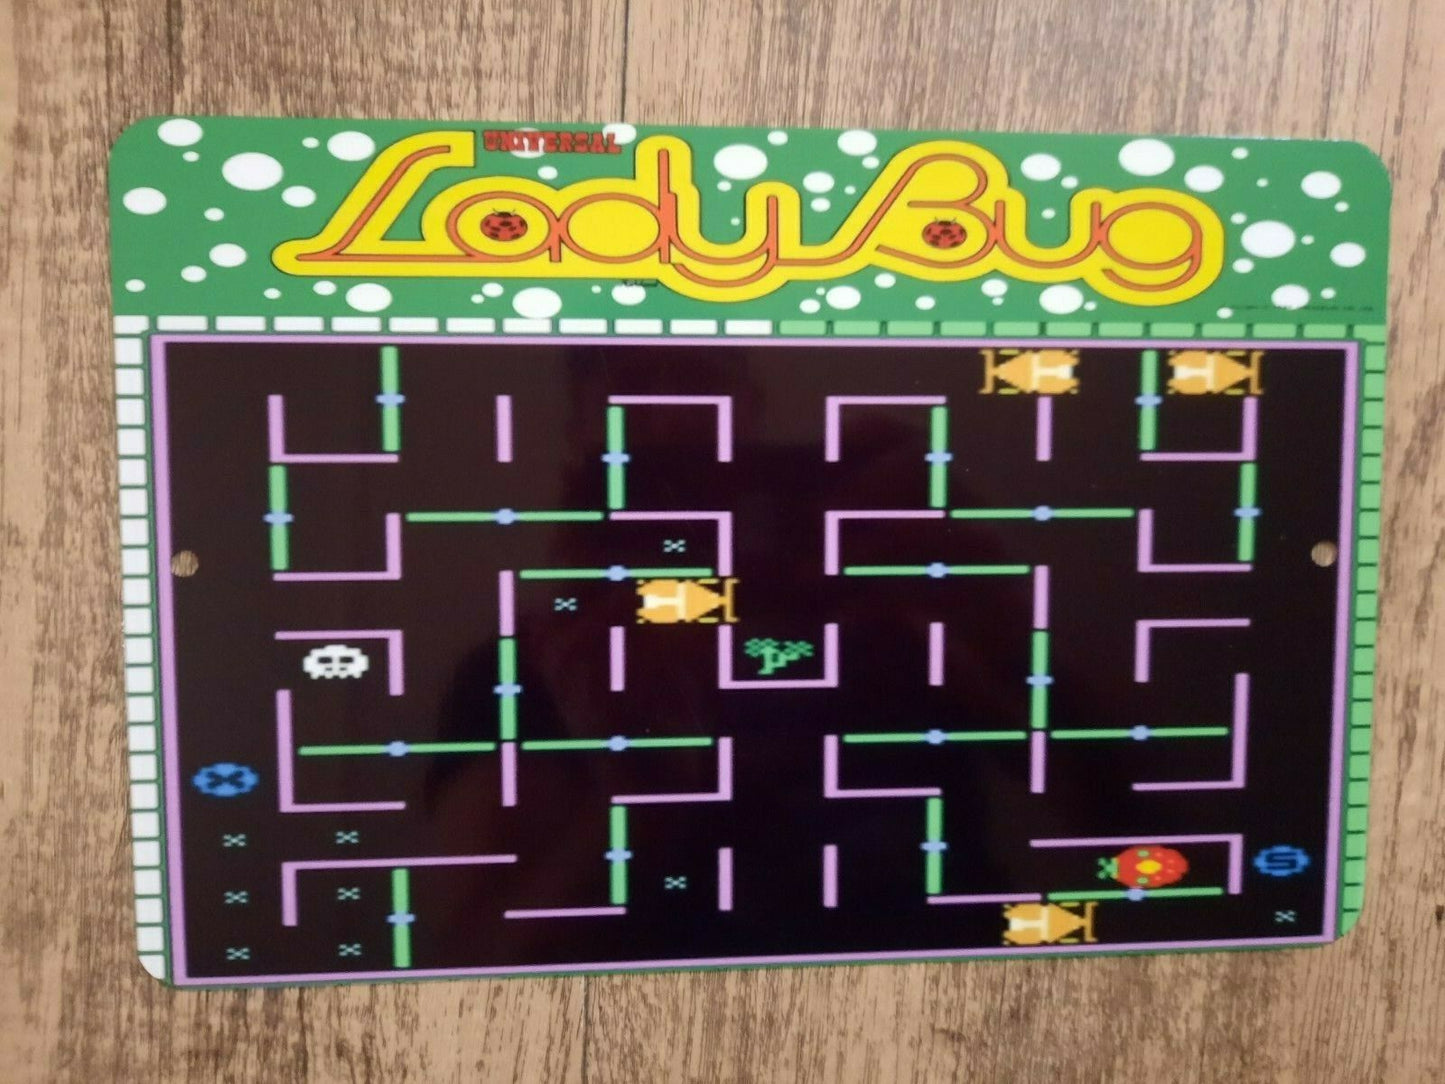 Ladybug Classic Arcade Game 8x12 Metal Wall Sign Video Game